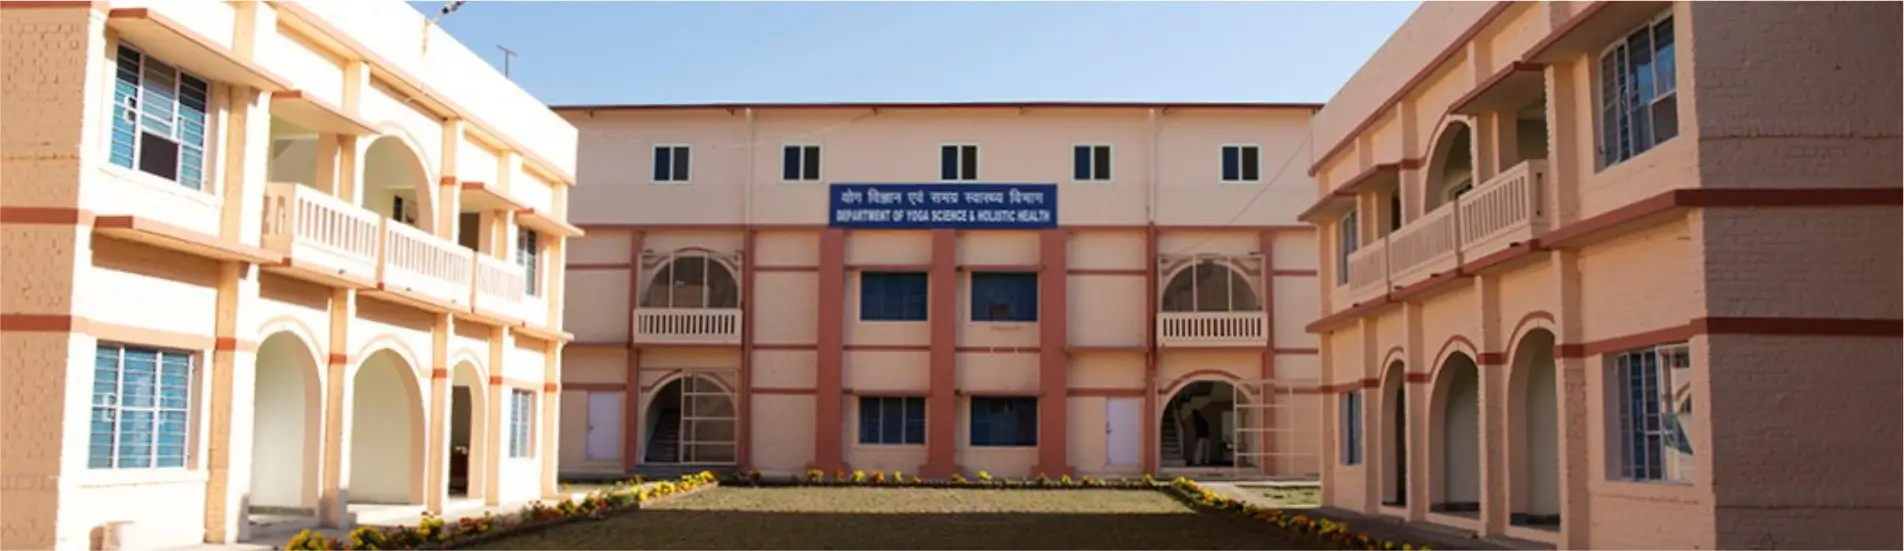 Building Exterior - Himalayan School of Yoga Science